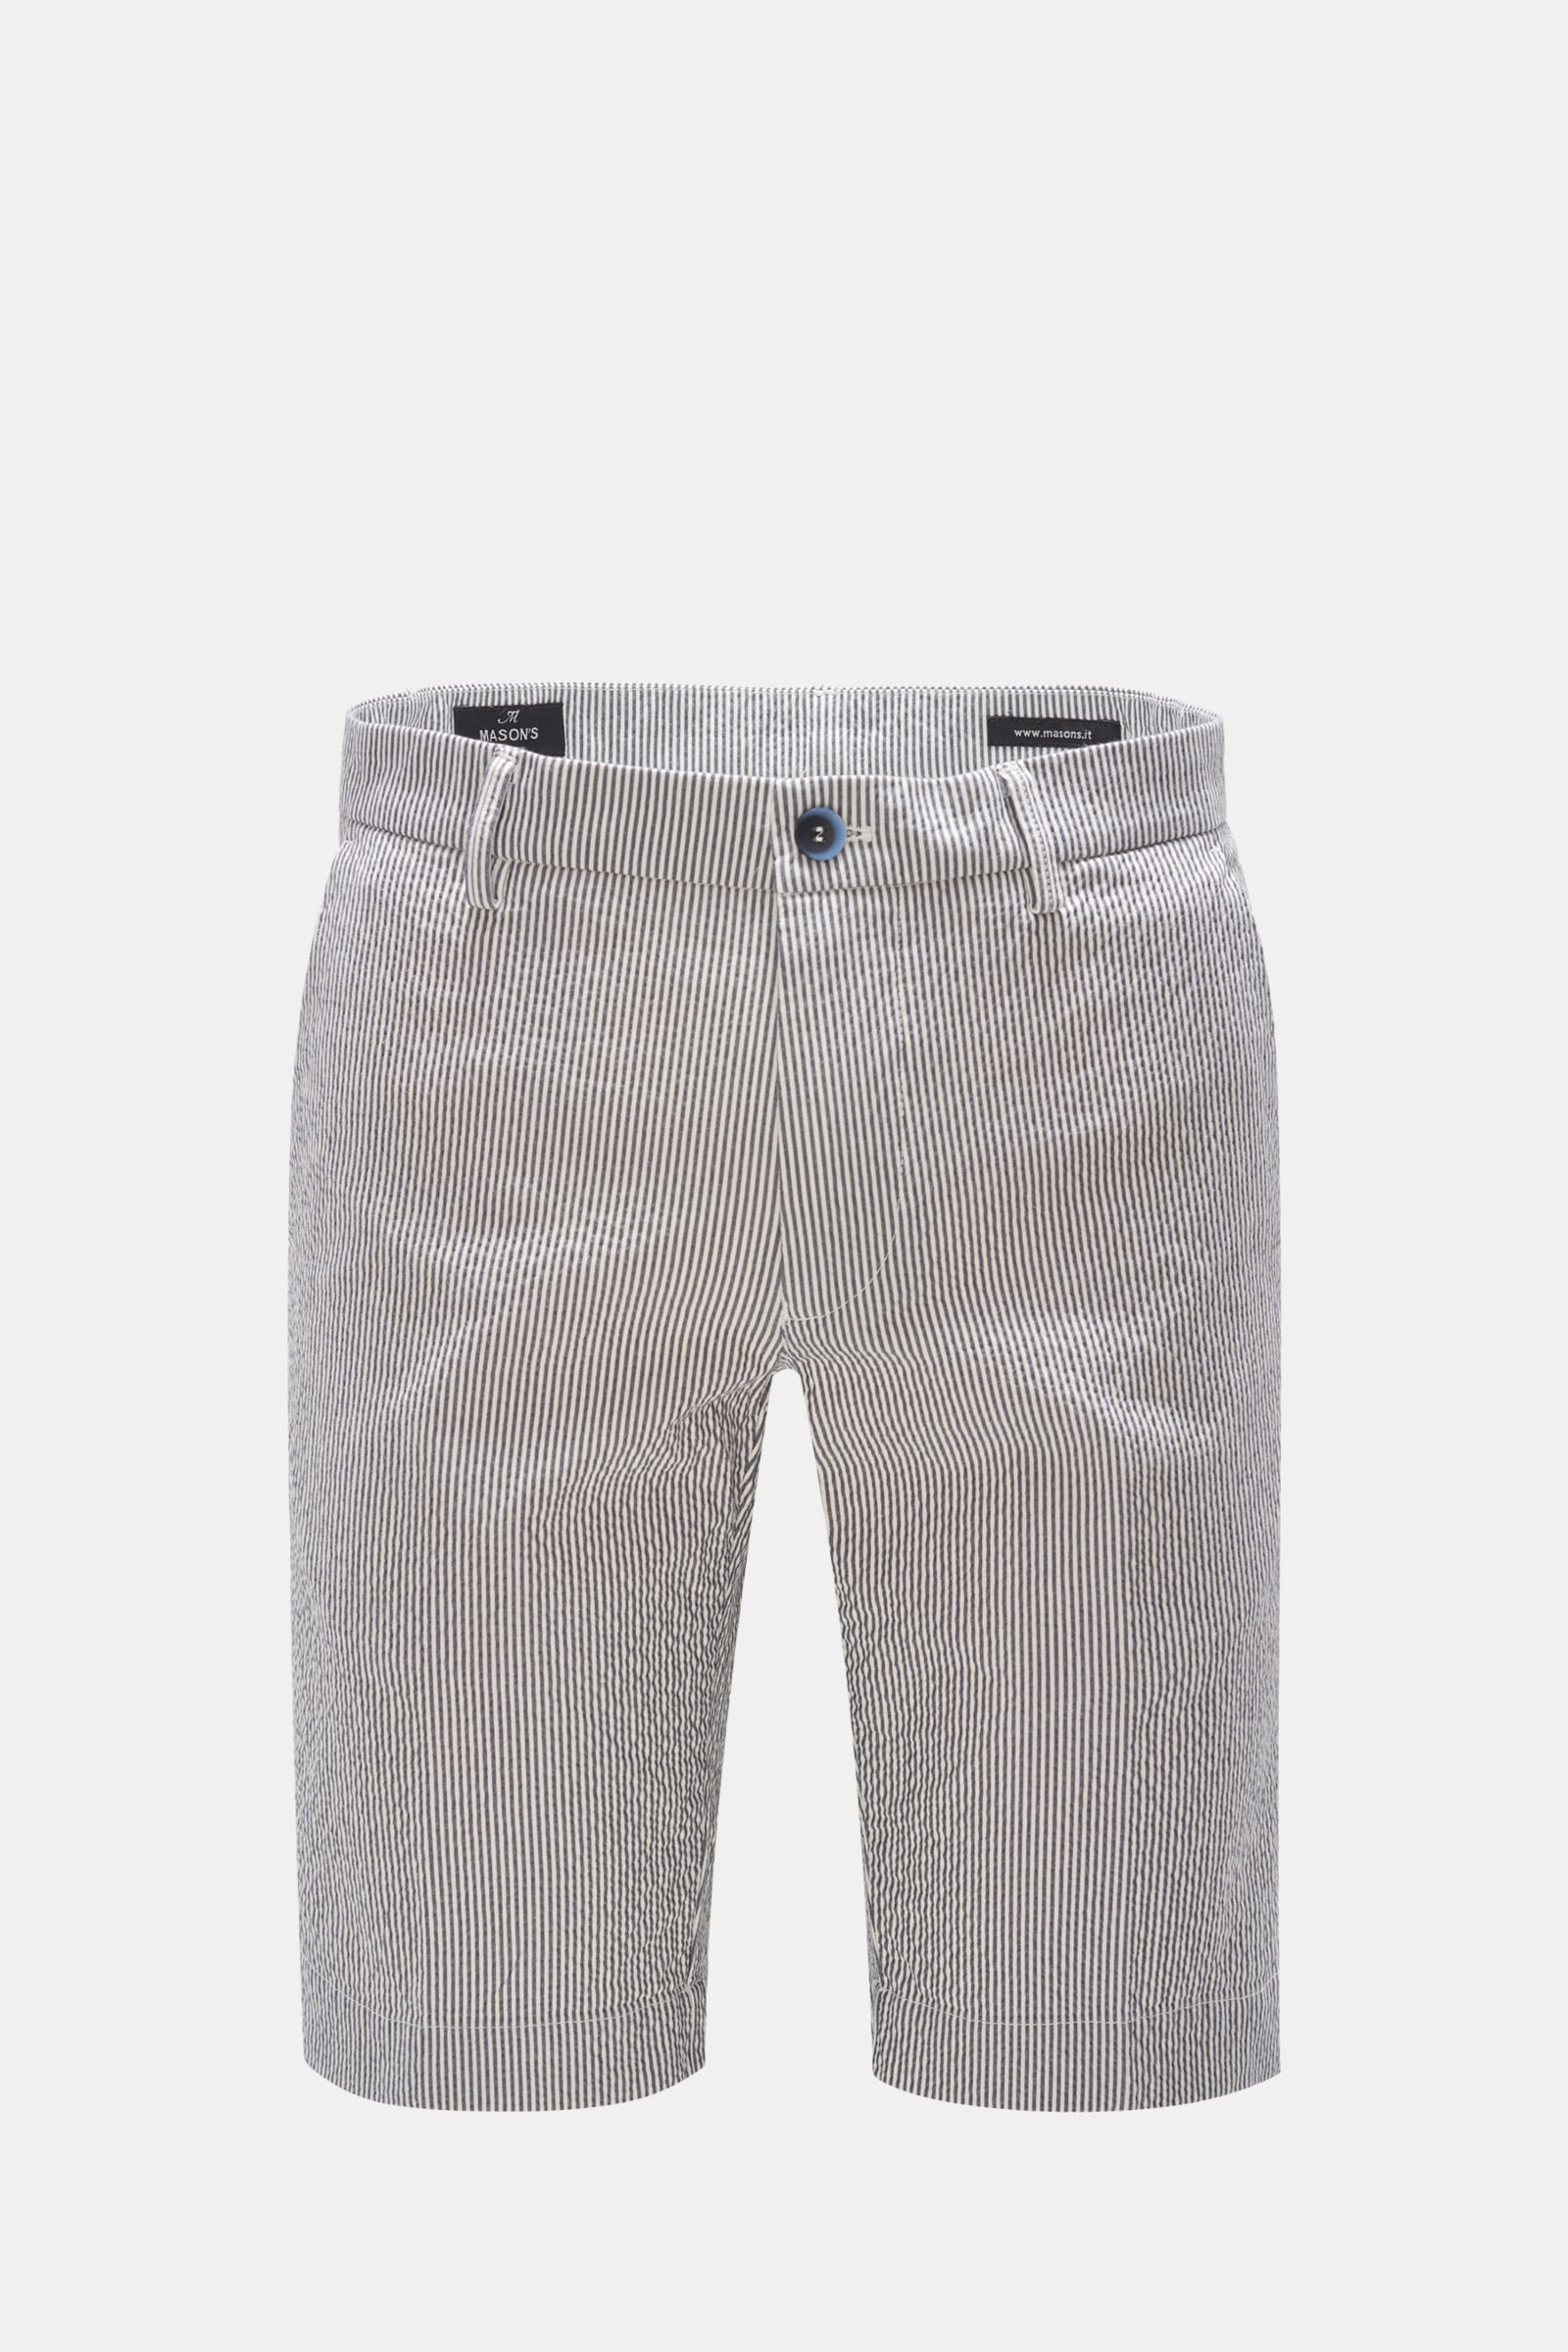 Seersucker bermuda shorts 'Torino' grey-blue and white stripes